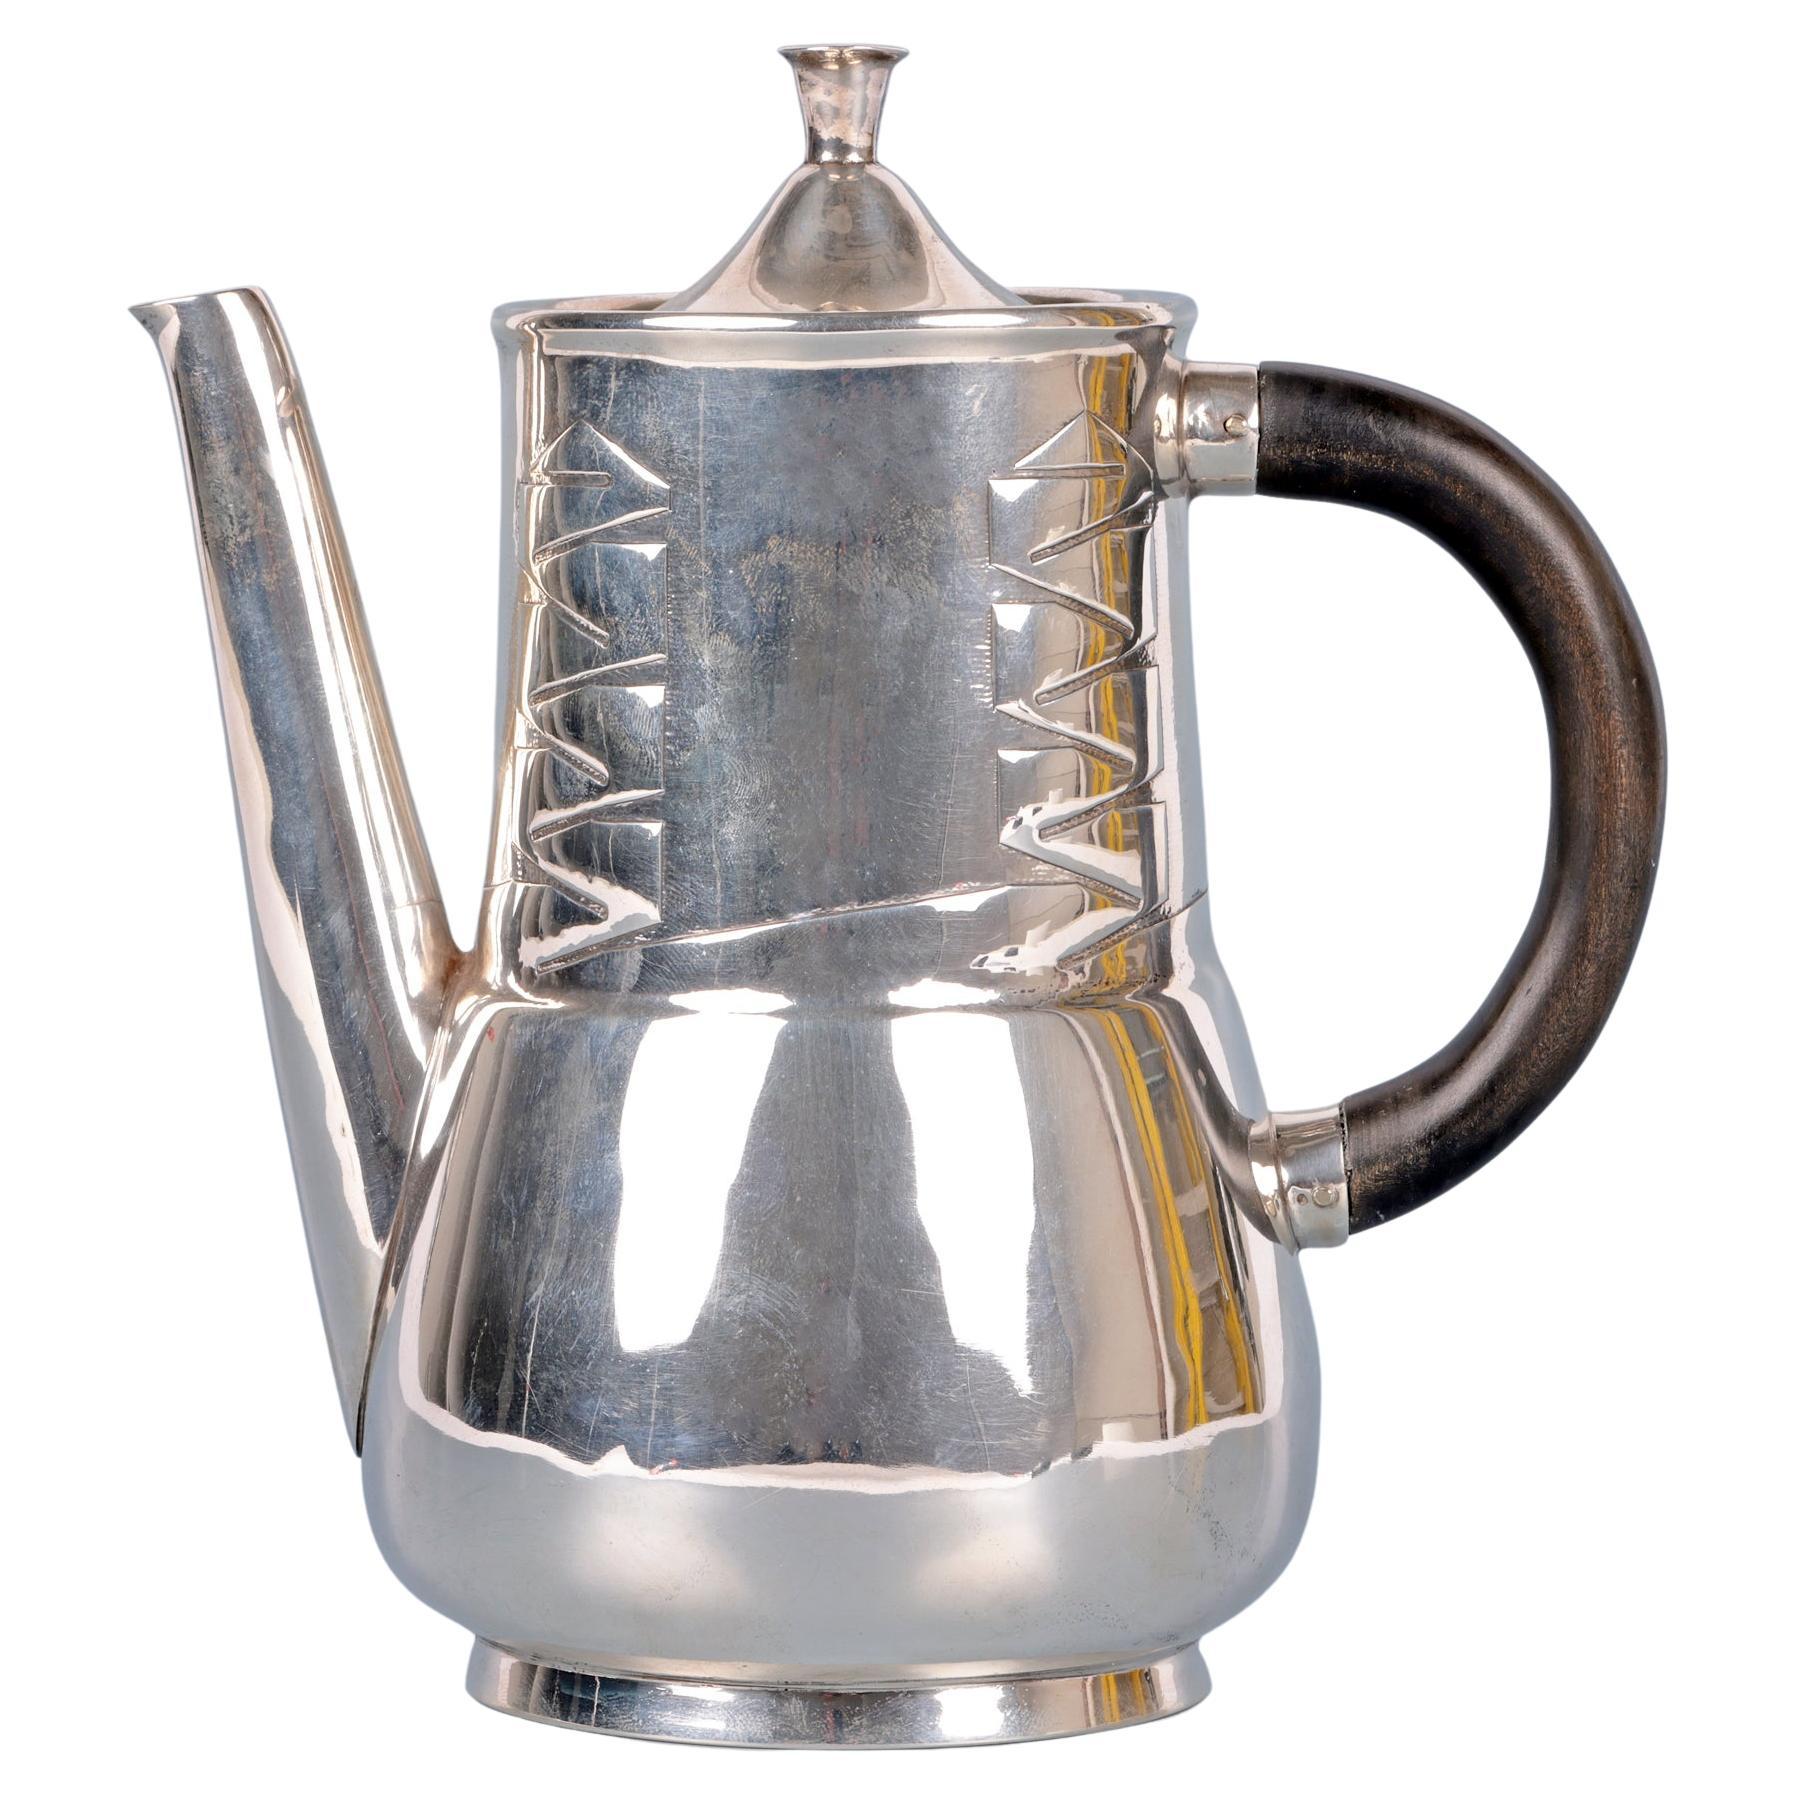  Archibald Knox Liberty & Co Silver Art Nouveau Silver Teapot